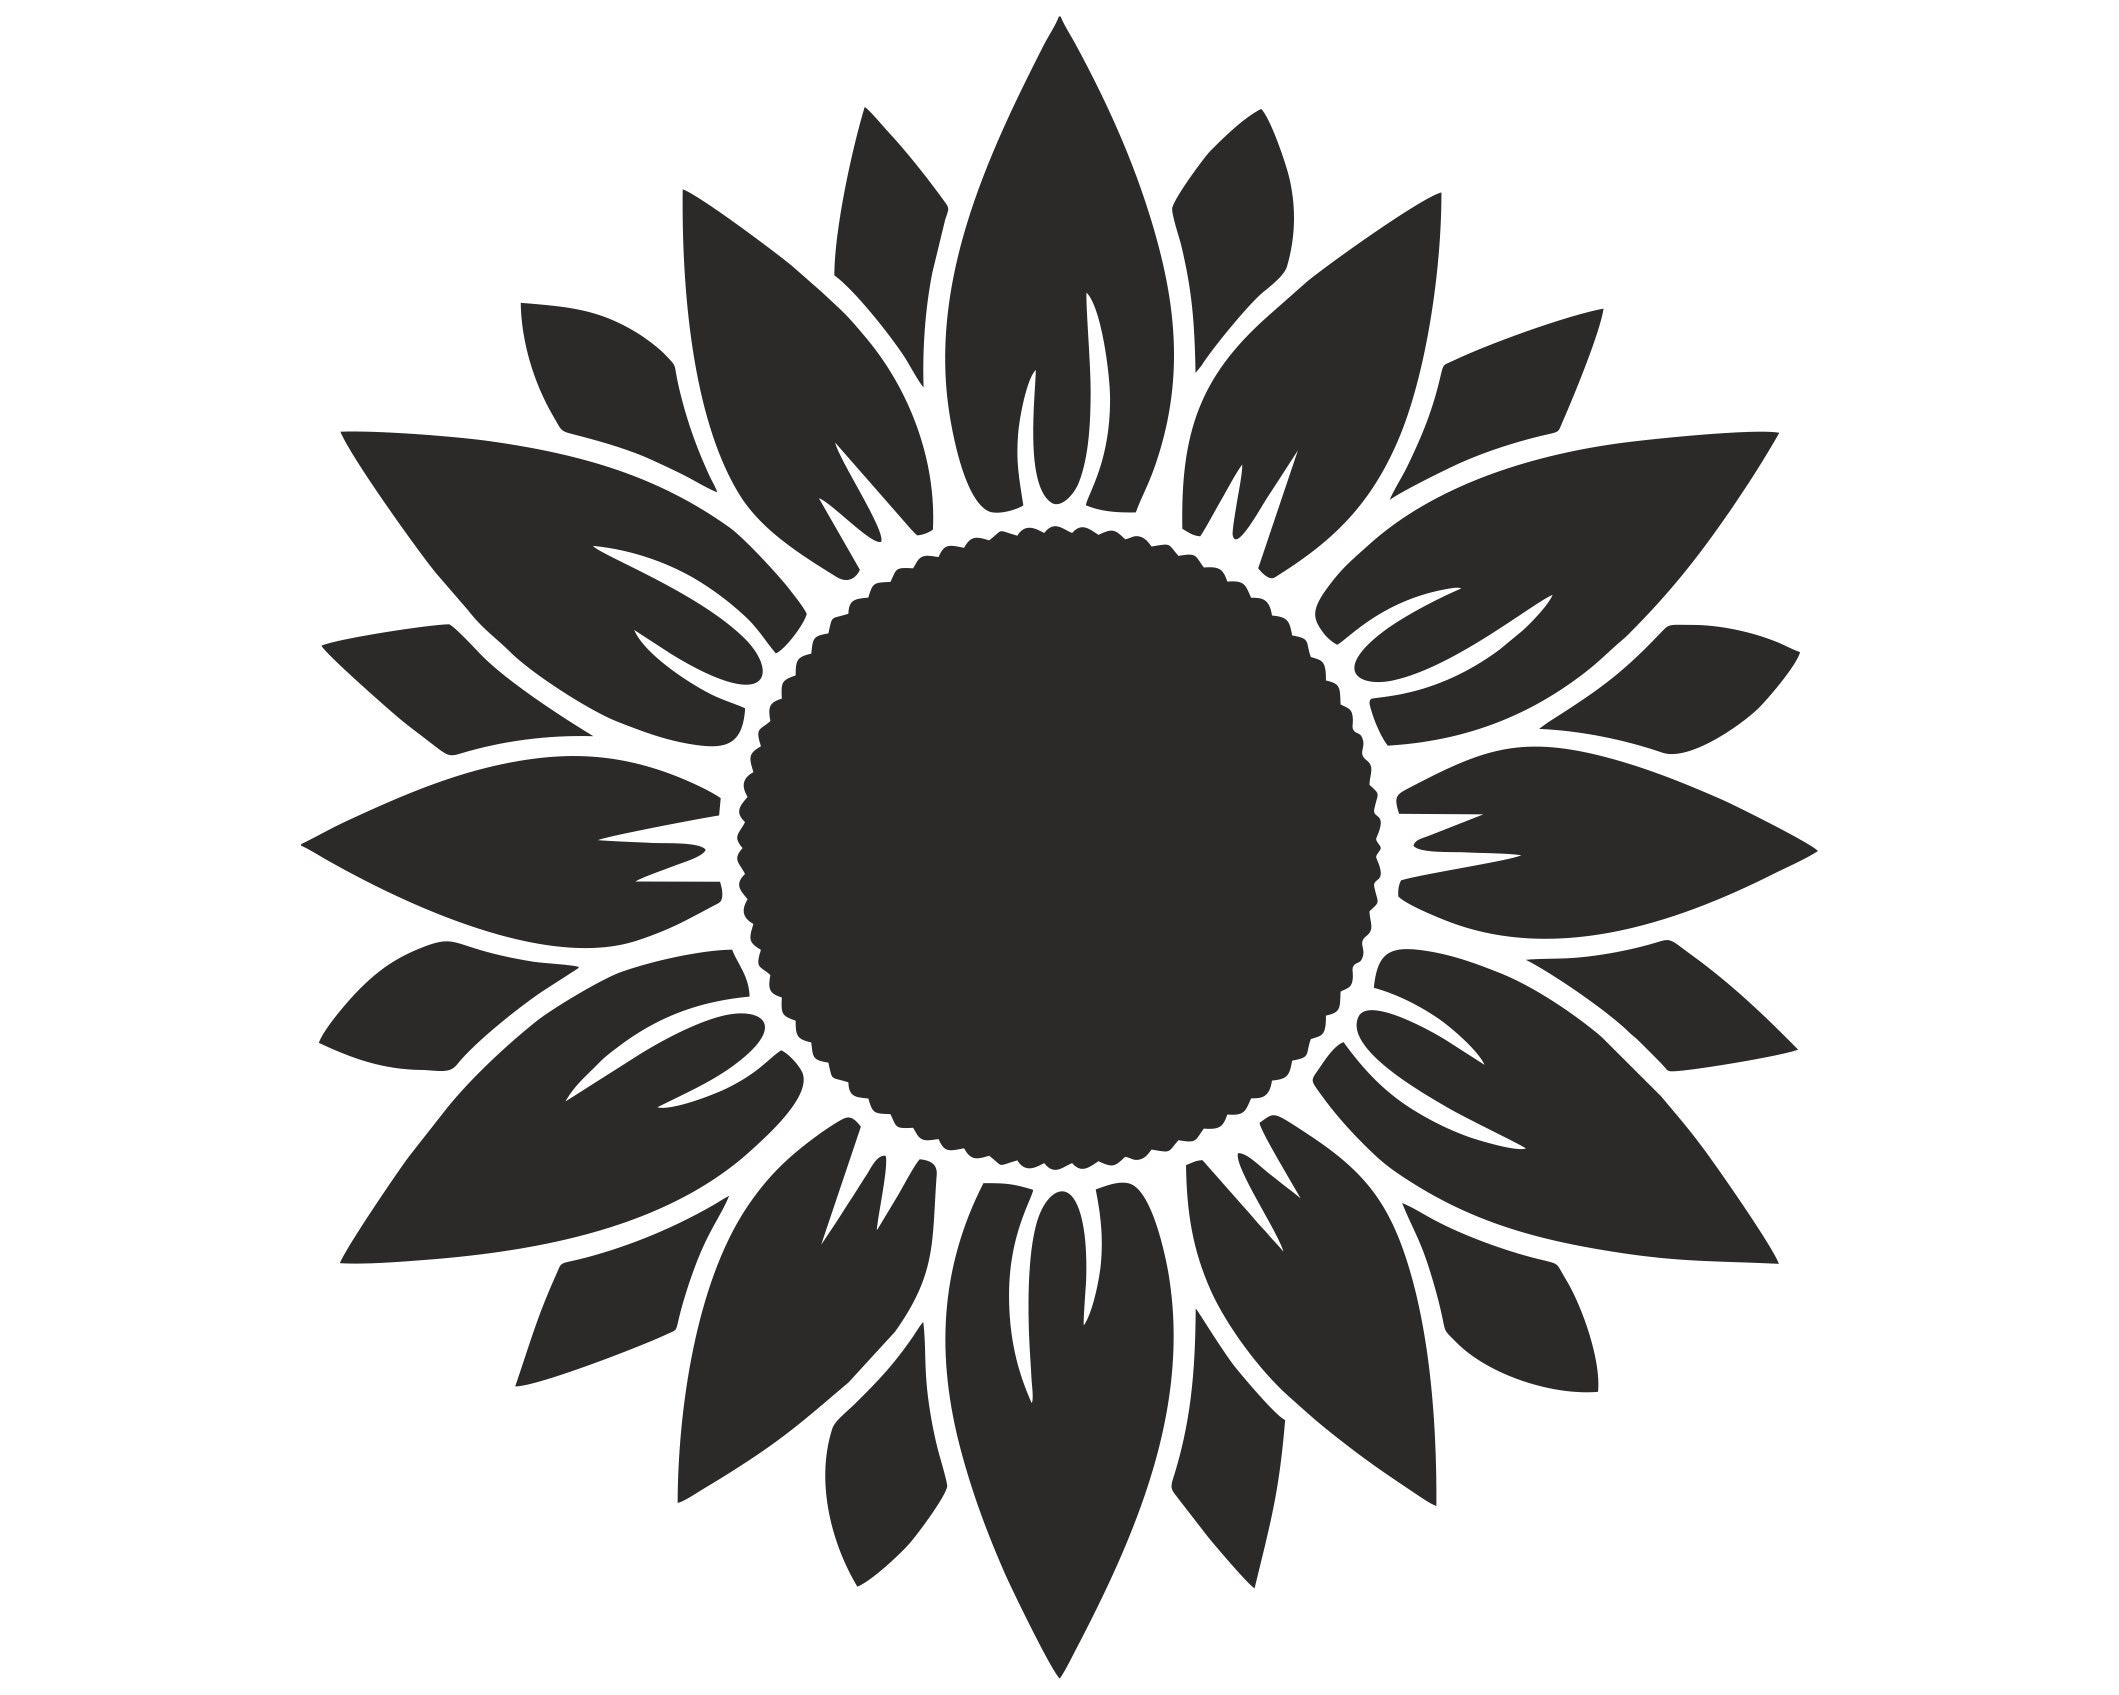 Pin on Sunflower SVG